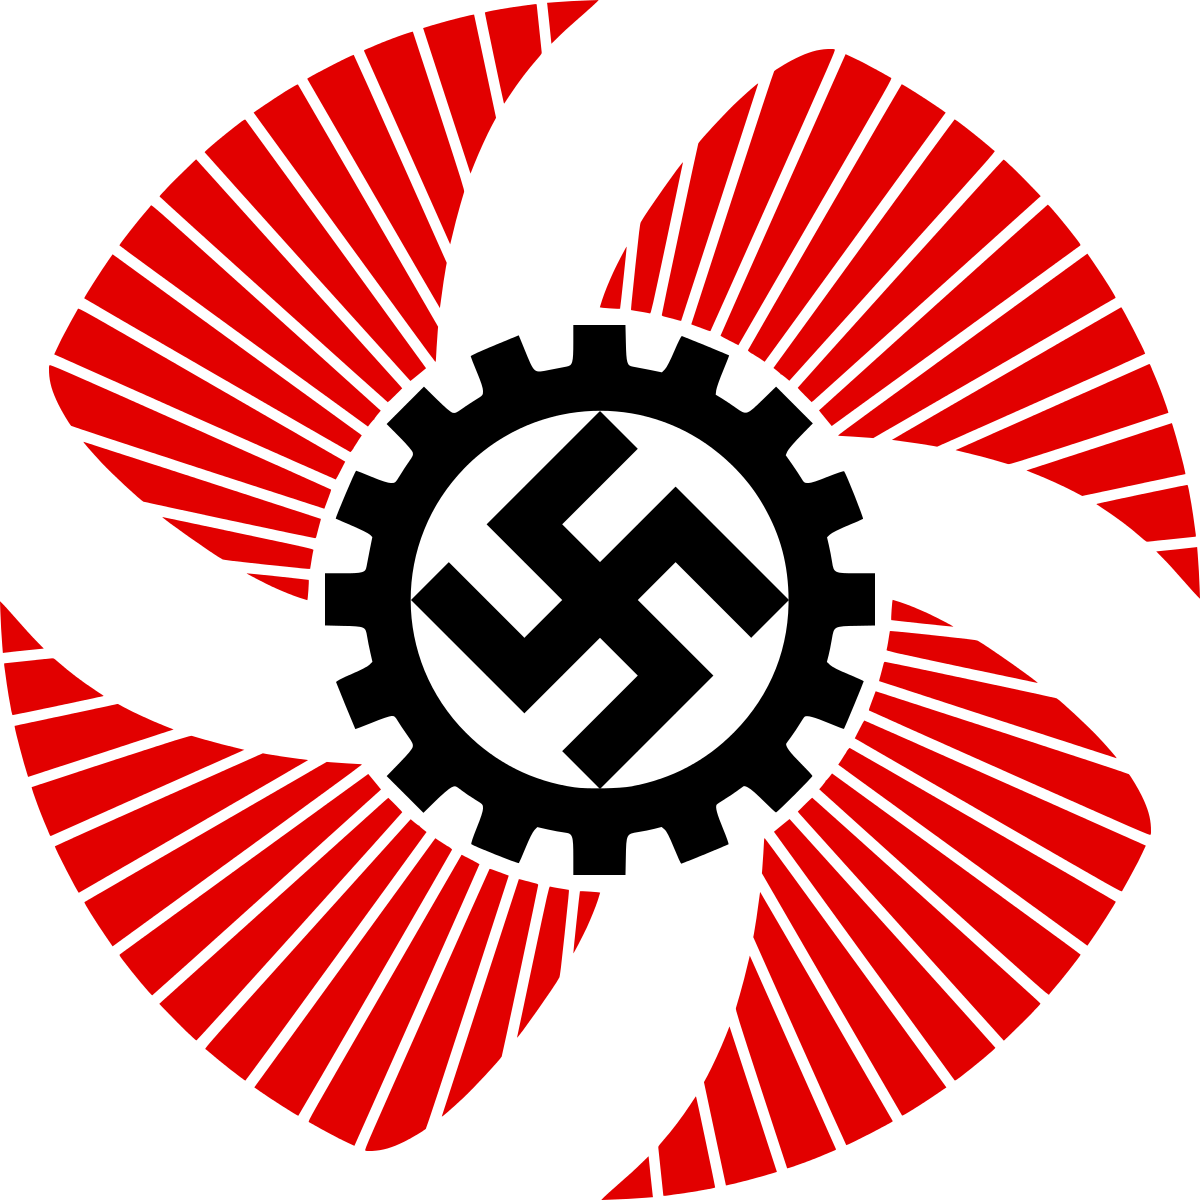 https://upload.wikimedia.org/wikipedia/commons/thumb/a/ad/KdF_Symbol.svg/1200px-KdF_Symbol.svg.png